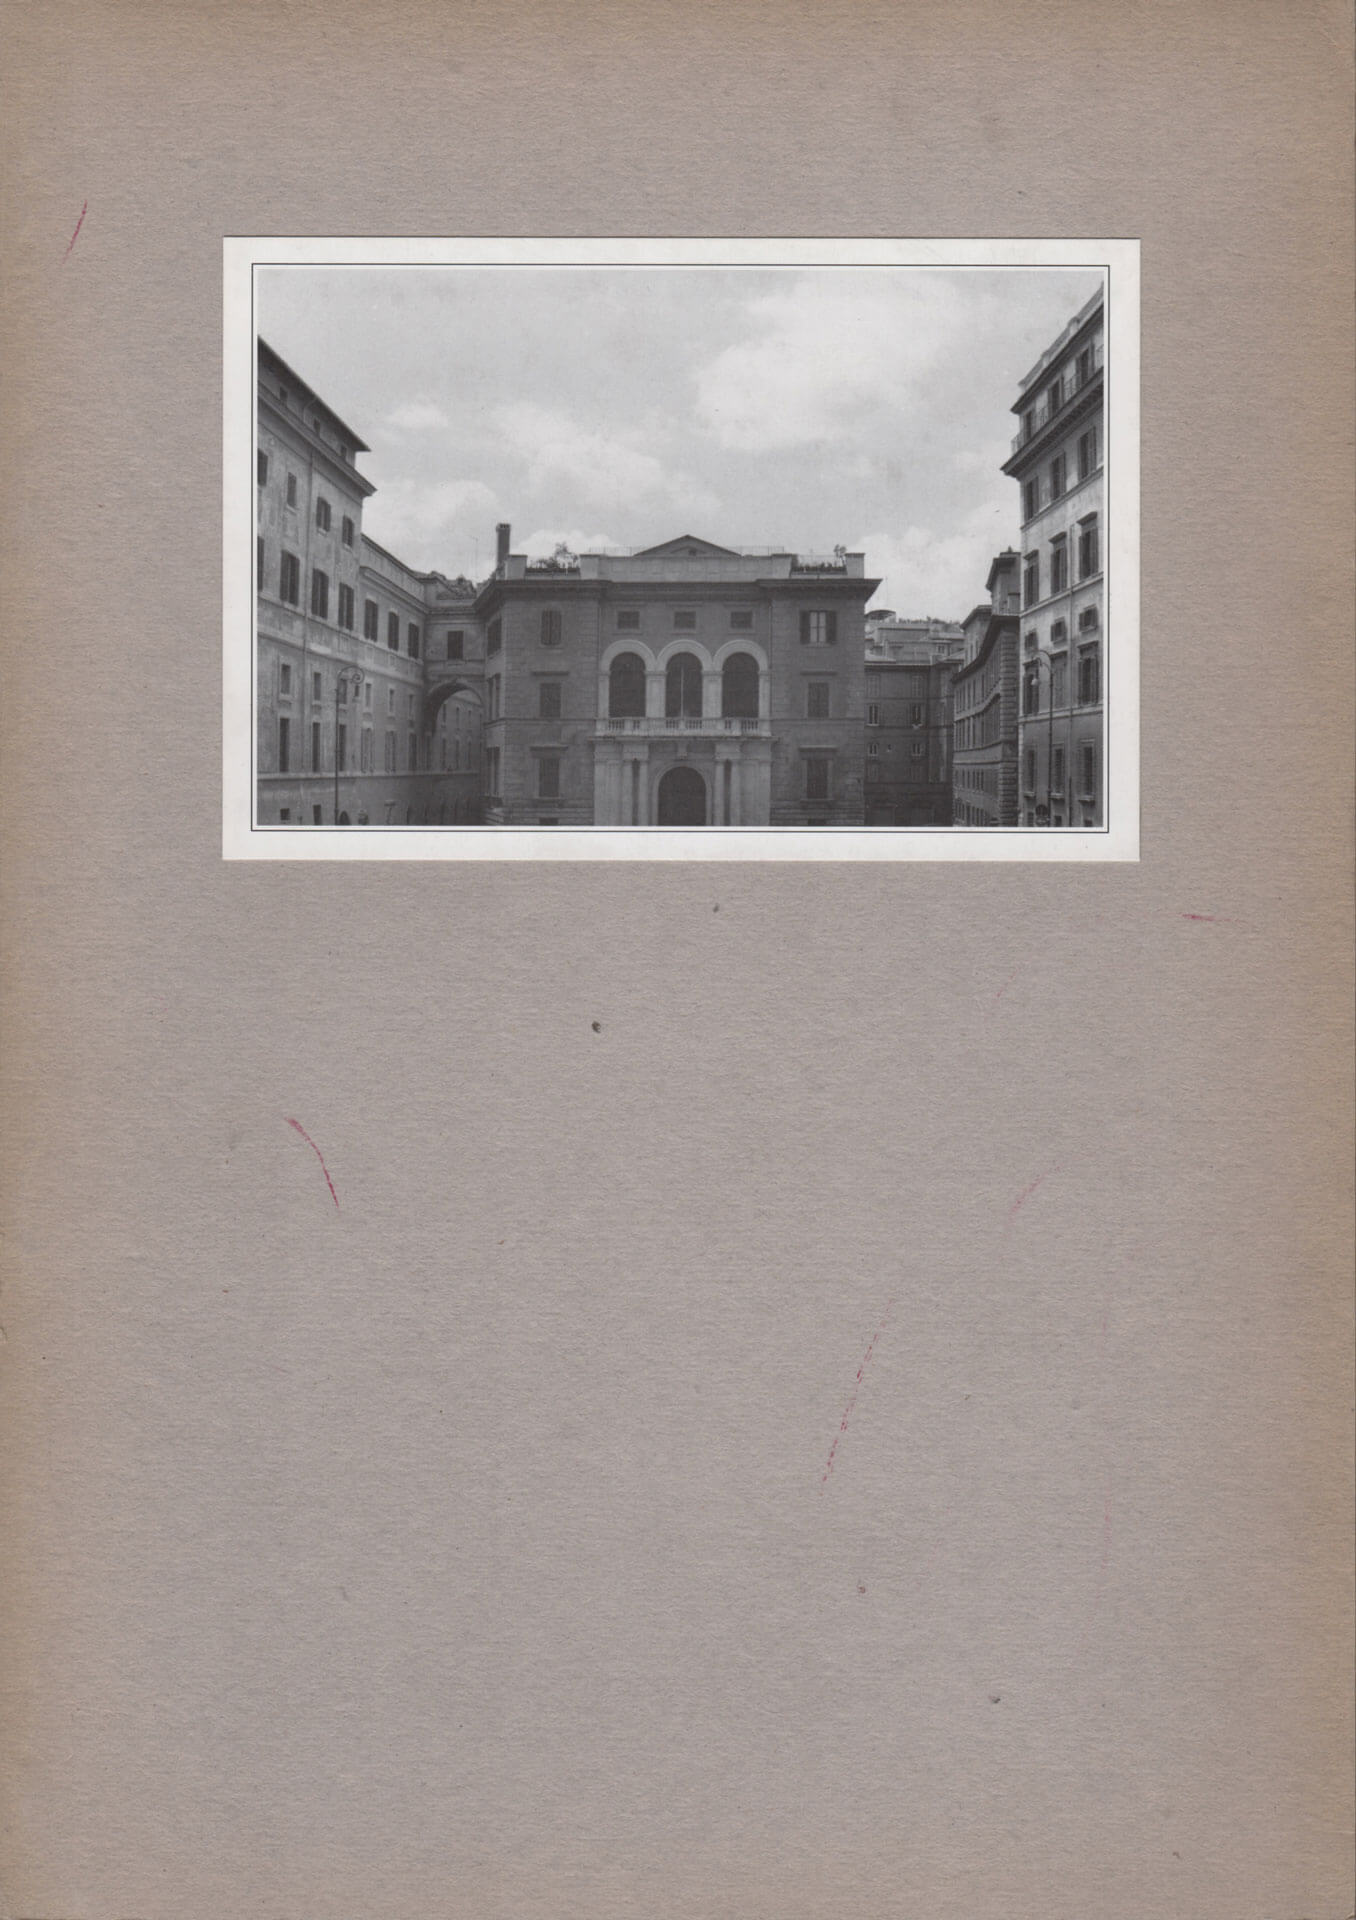 Studio Stefania Miscetti | Catalogues | Bloom Kentridge | Projected artists - Obiettivo: Roma I/V | Memory and Geography